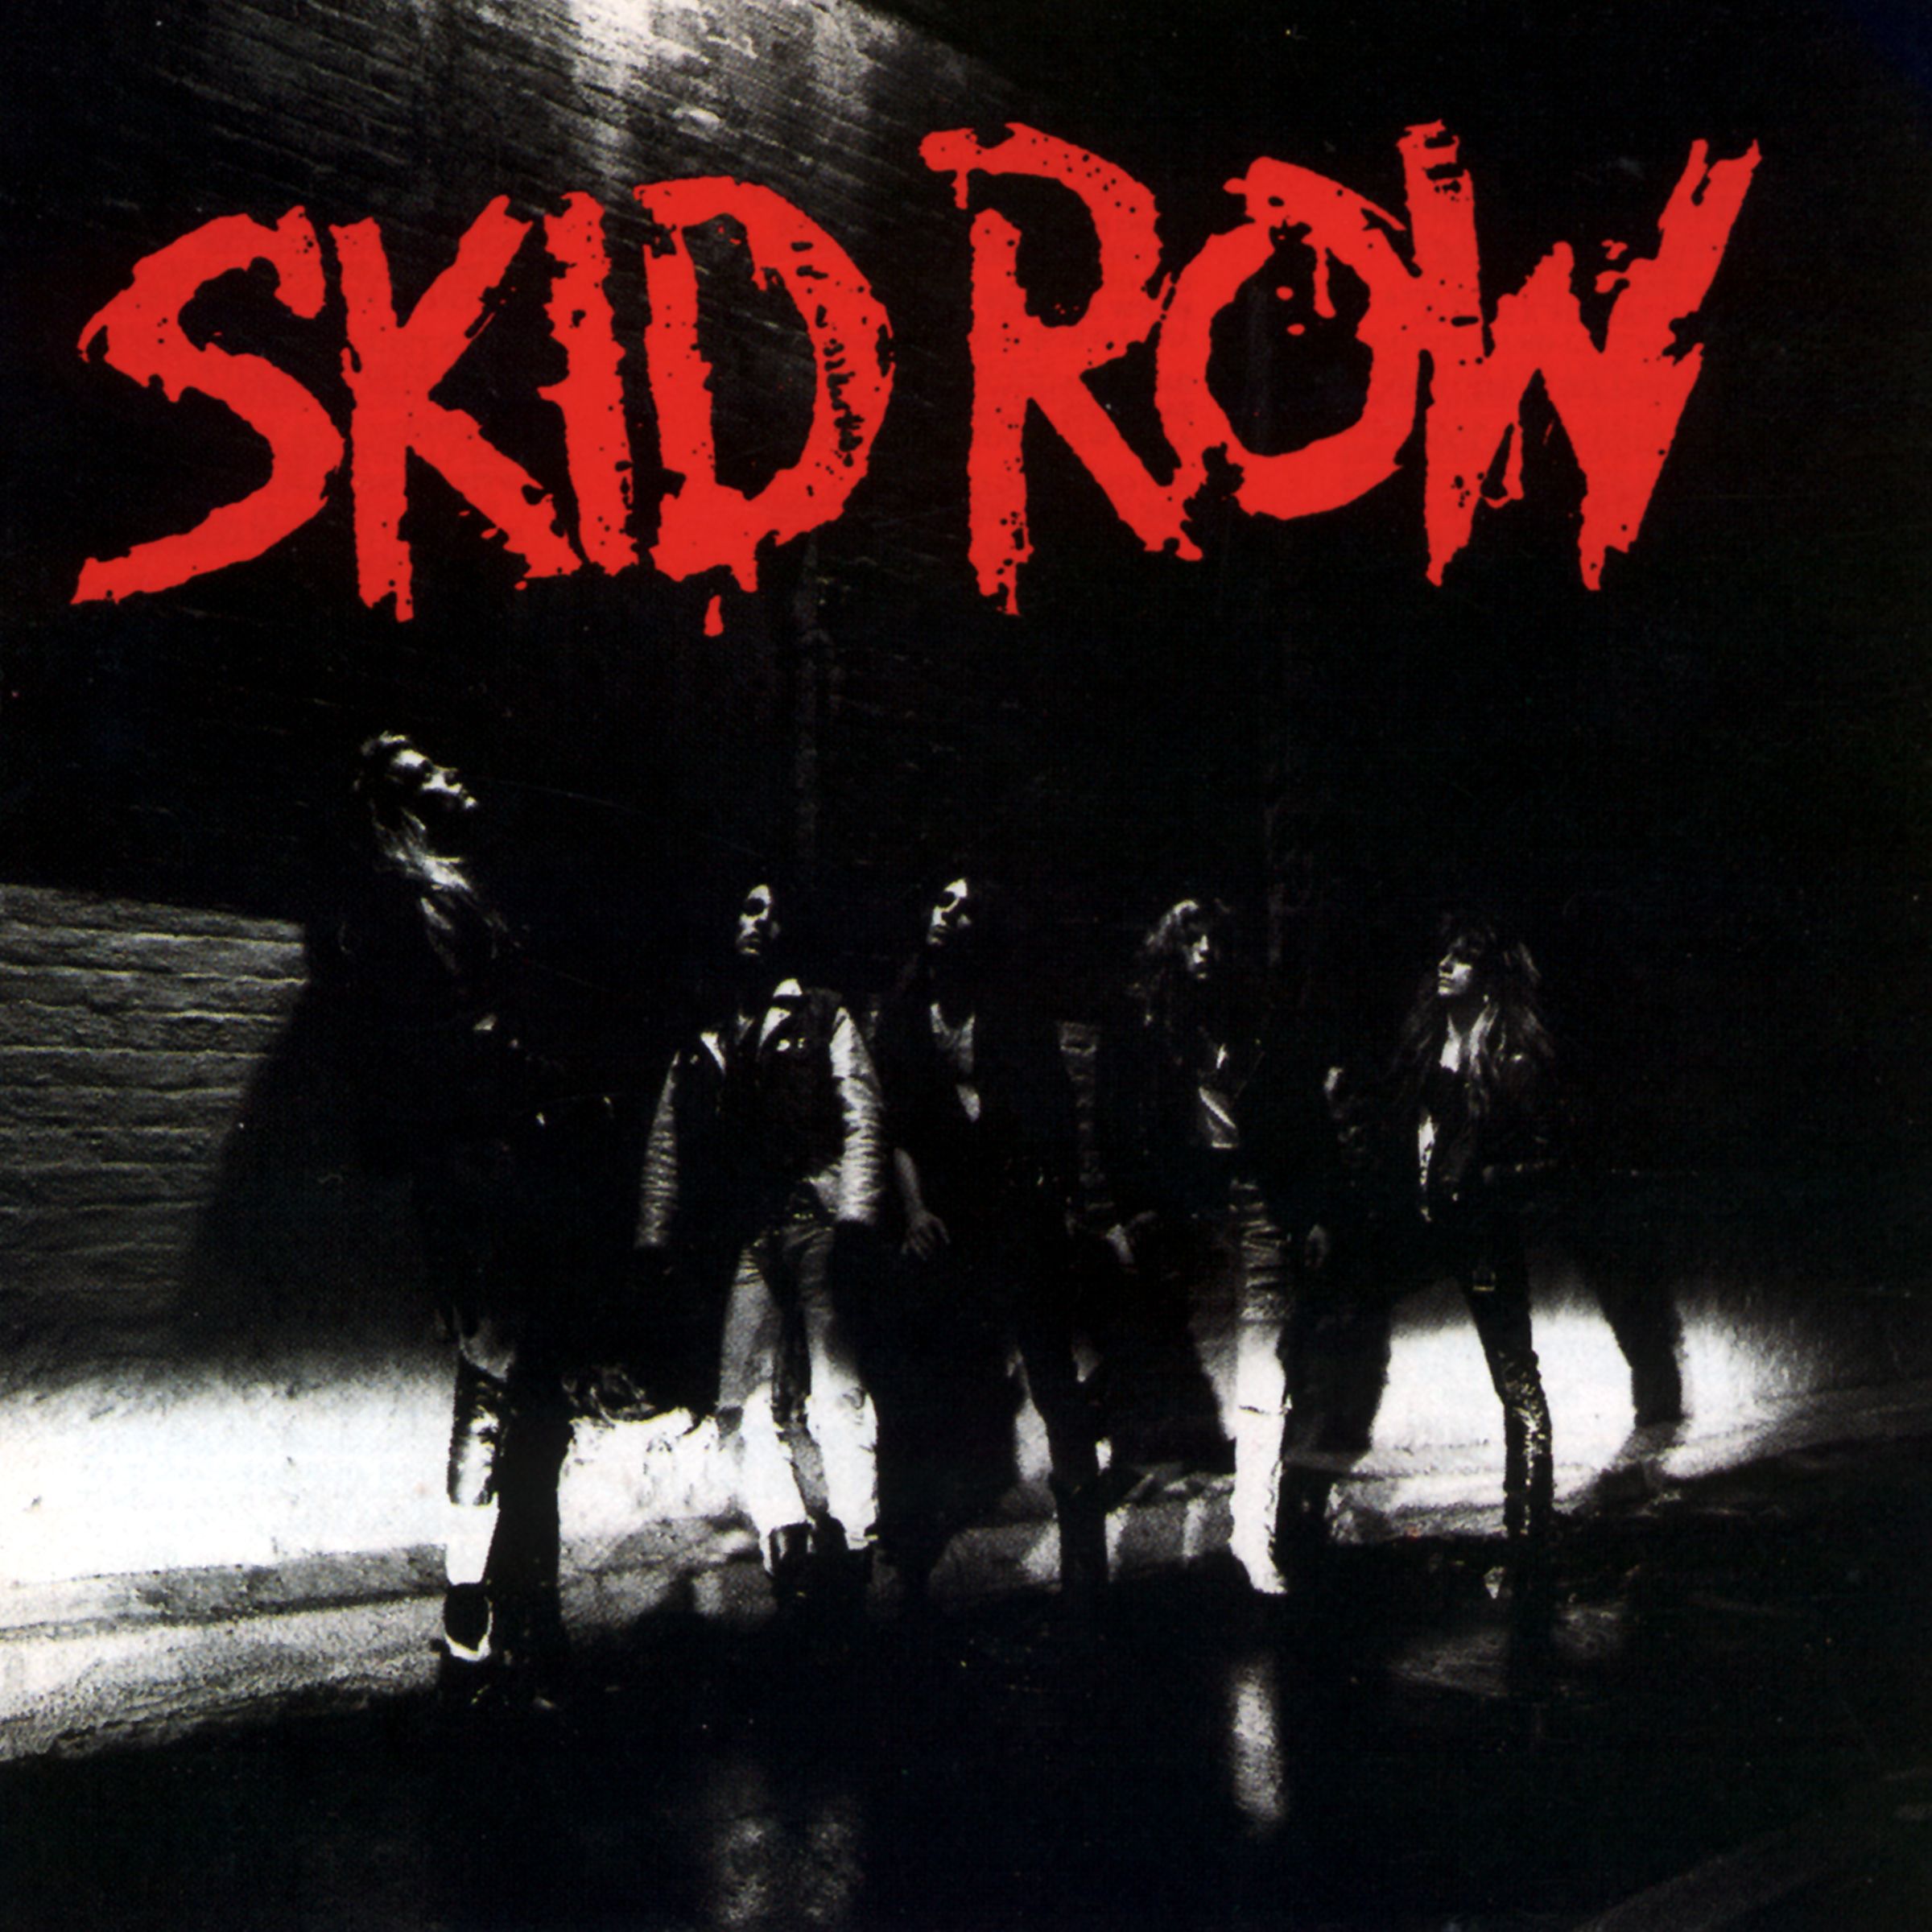 Skid Row - Skid Row (1989/2016) [HDTracks FLAC 24bit/44,1kHz]